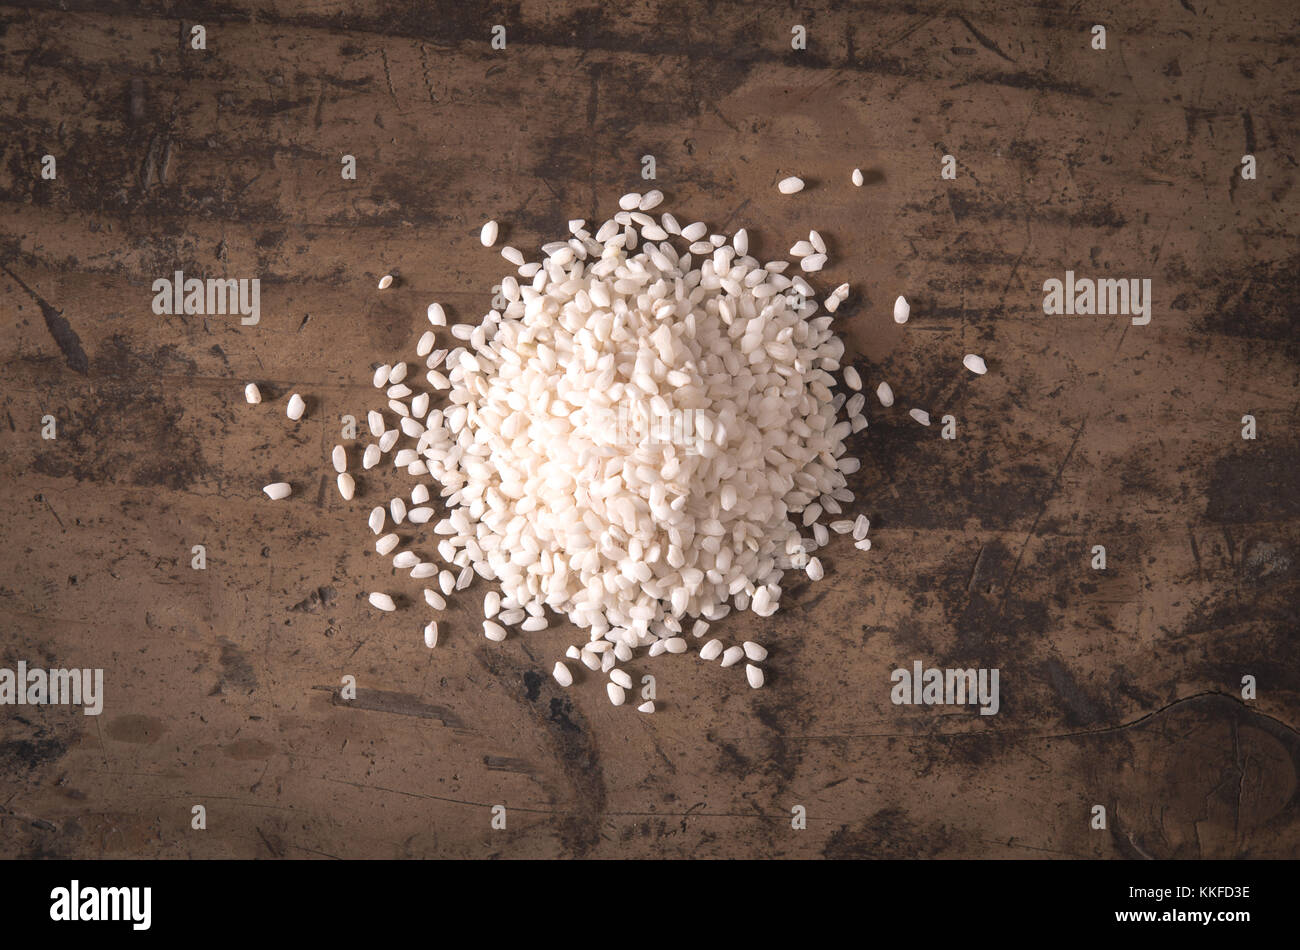 Vialone nano italian cultivar of small grain rice cultivated in south Lombardy Stock Photo